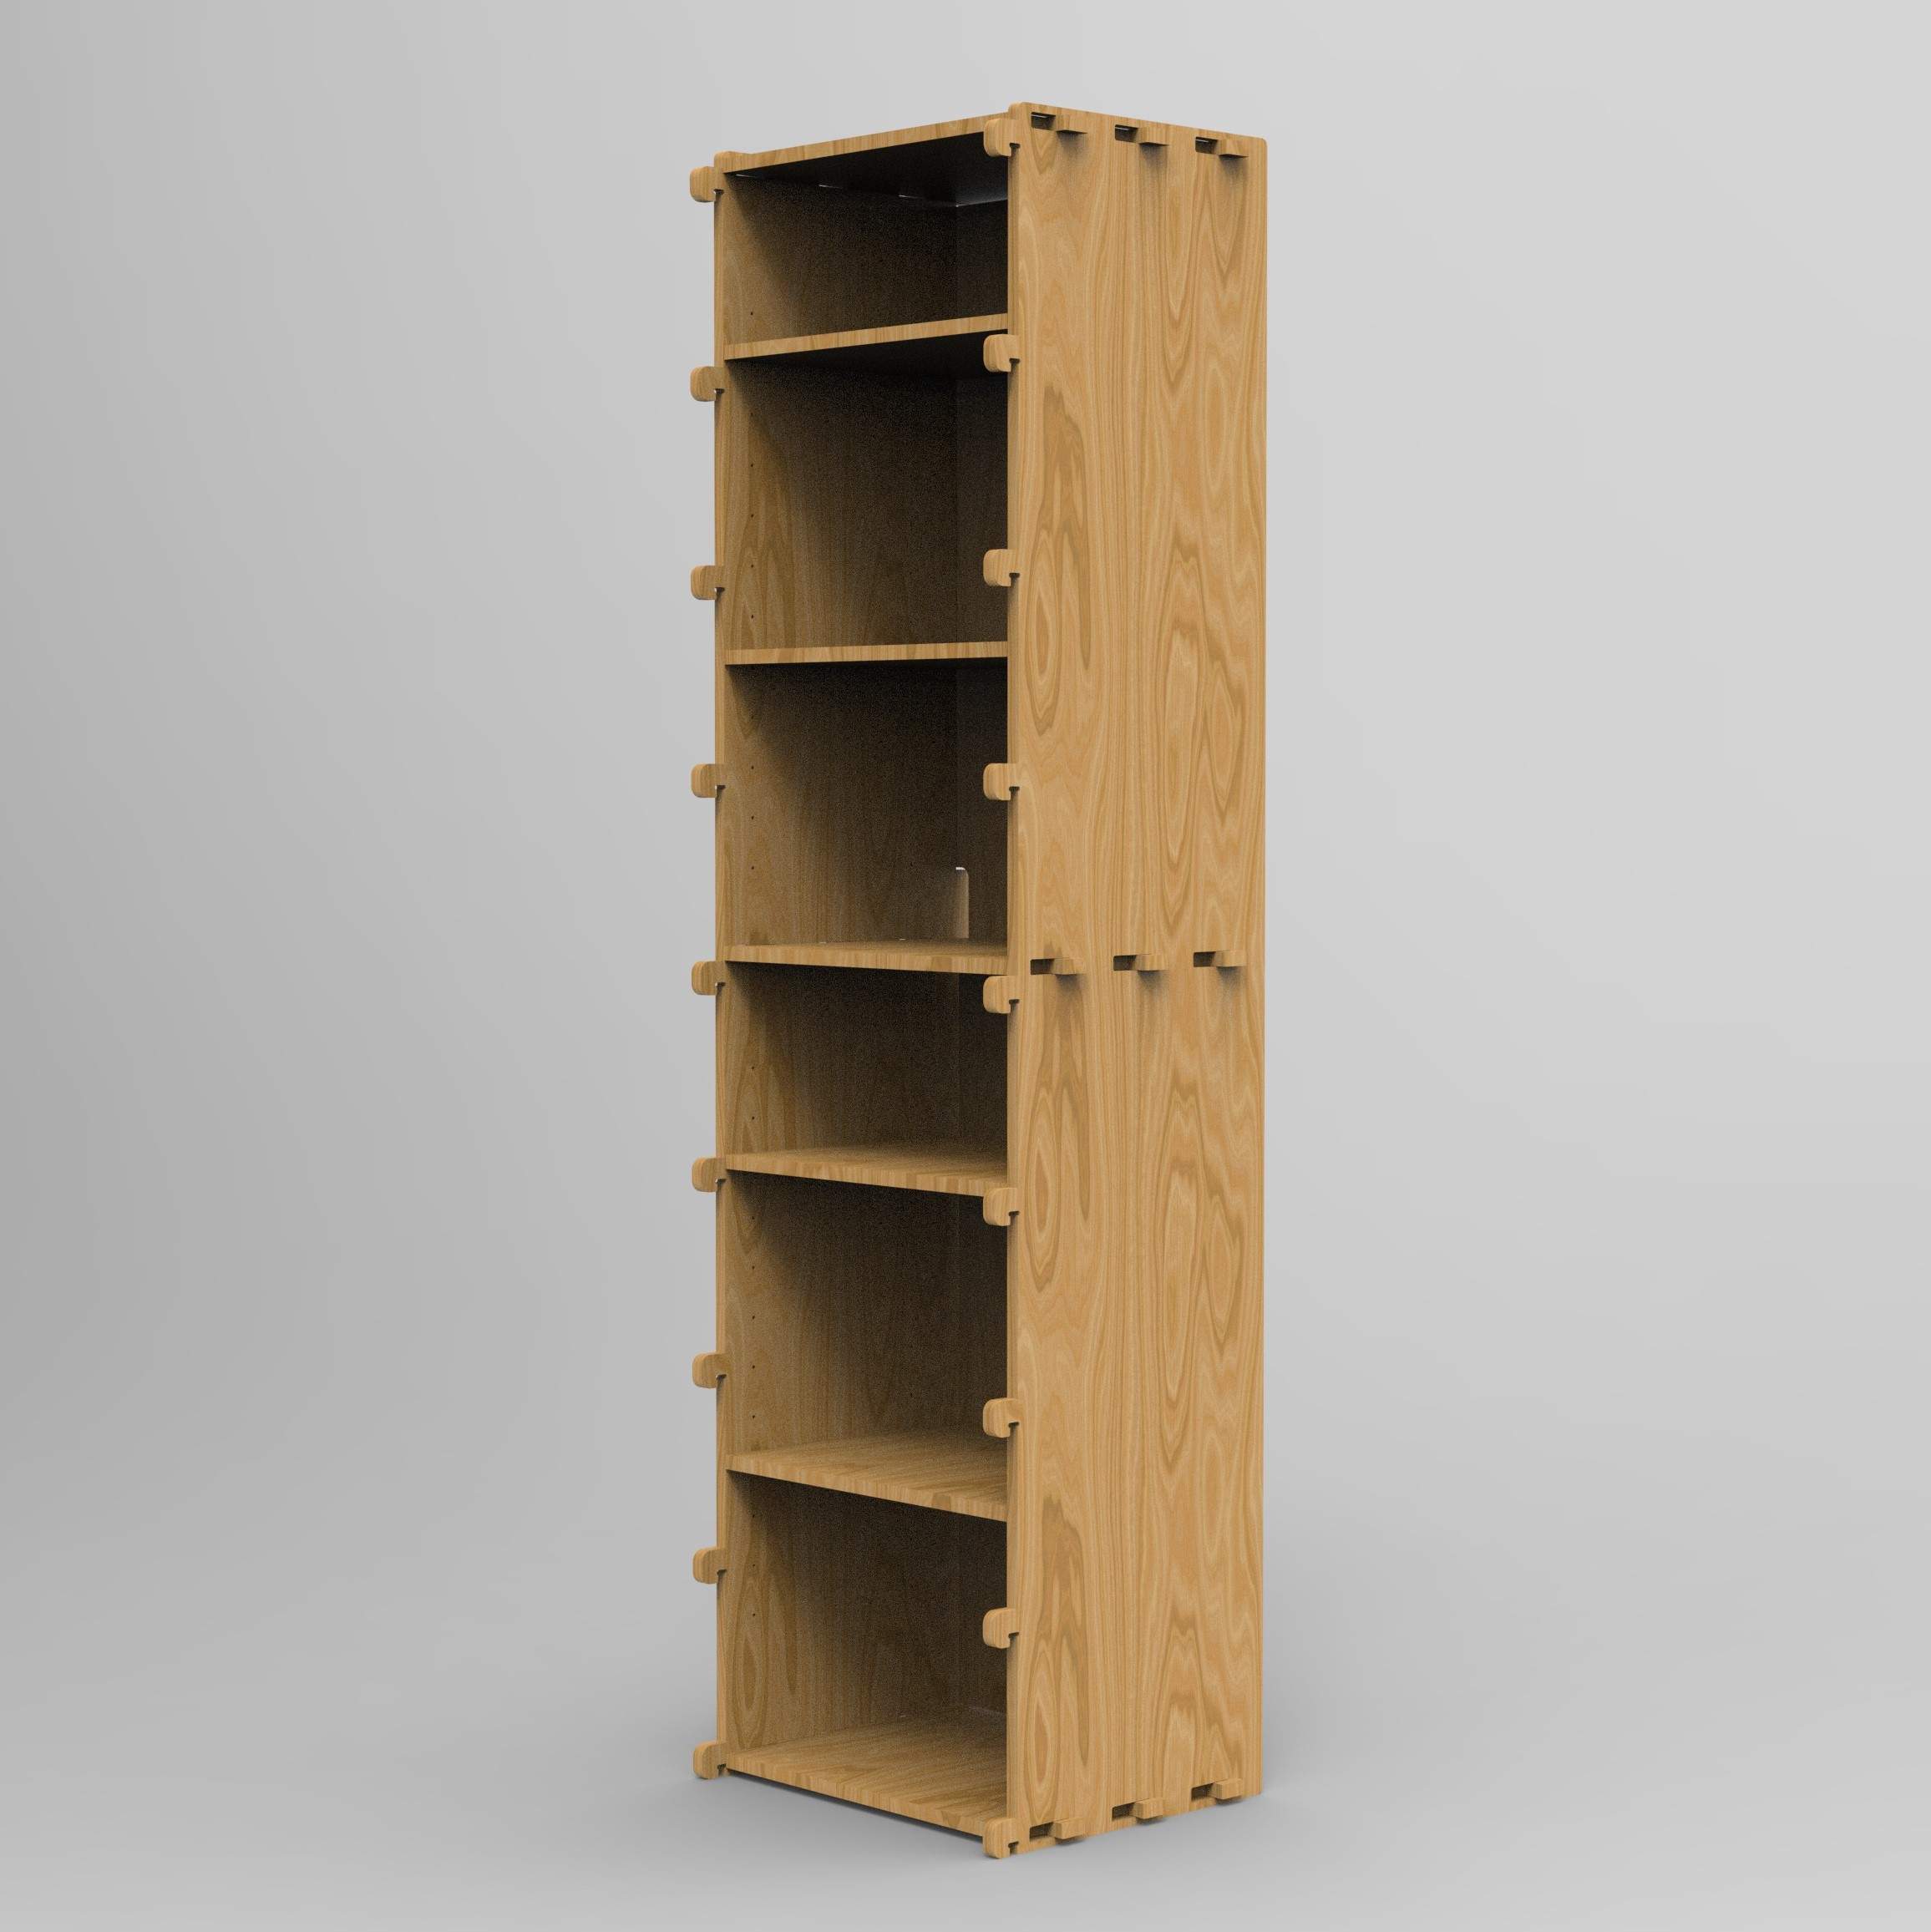 https://vaeg.elementor.cloud/wp-content/uploads/2022/04/Vaeg-430-stand-alone-tall-storage-cupboard-plywood-with-plywood-birch-or-Okoume-doors-6.jpg